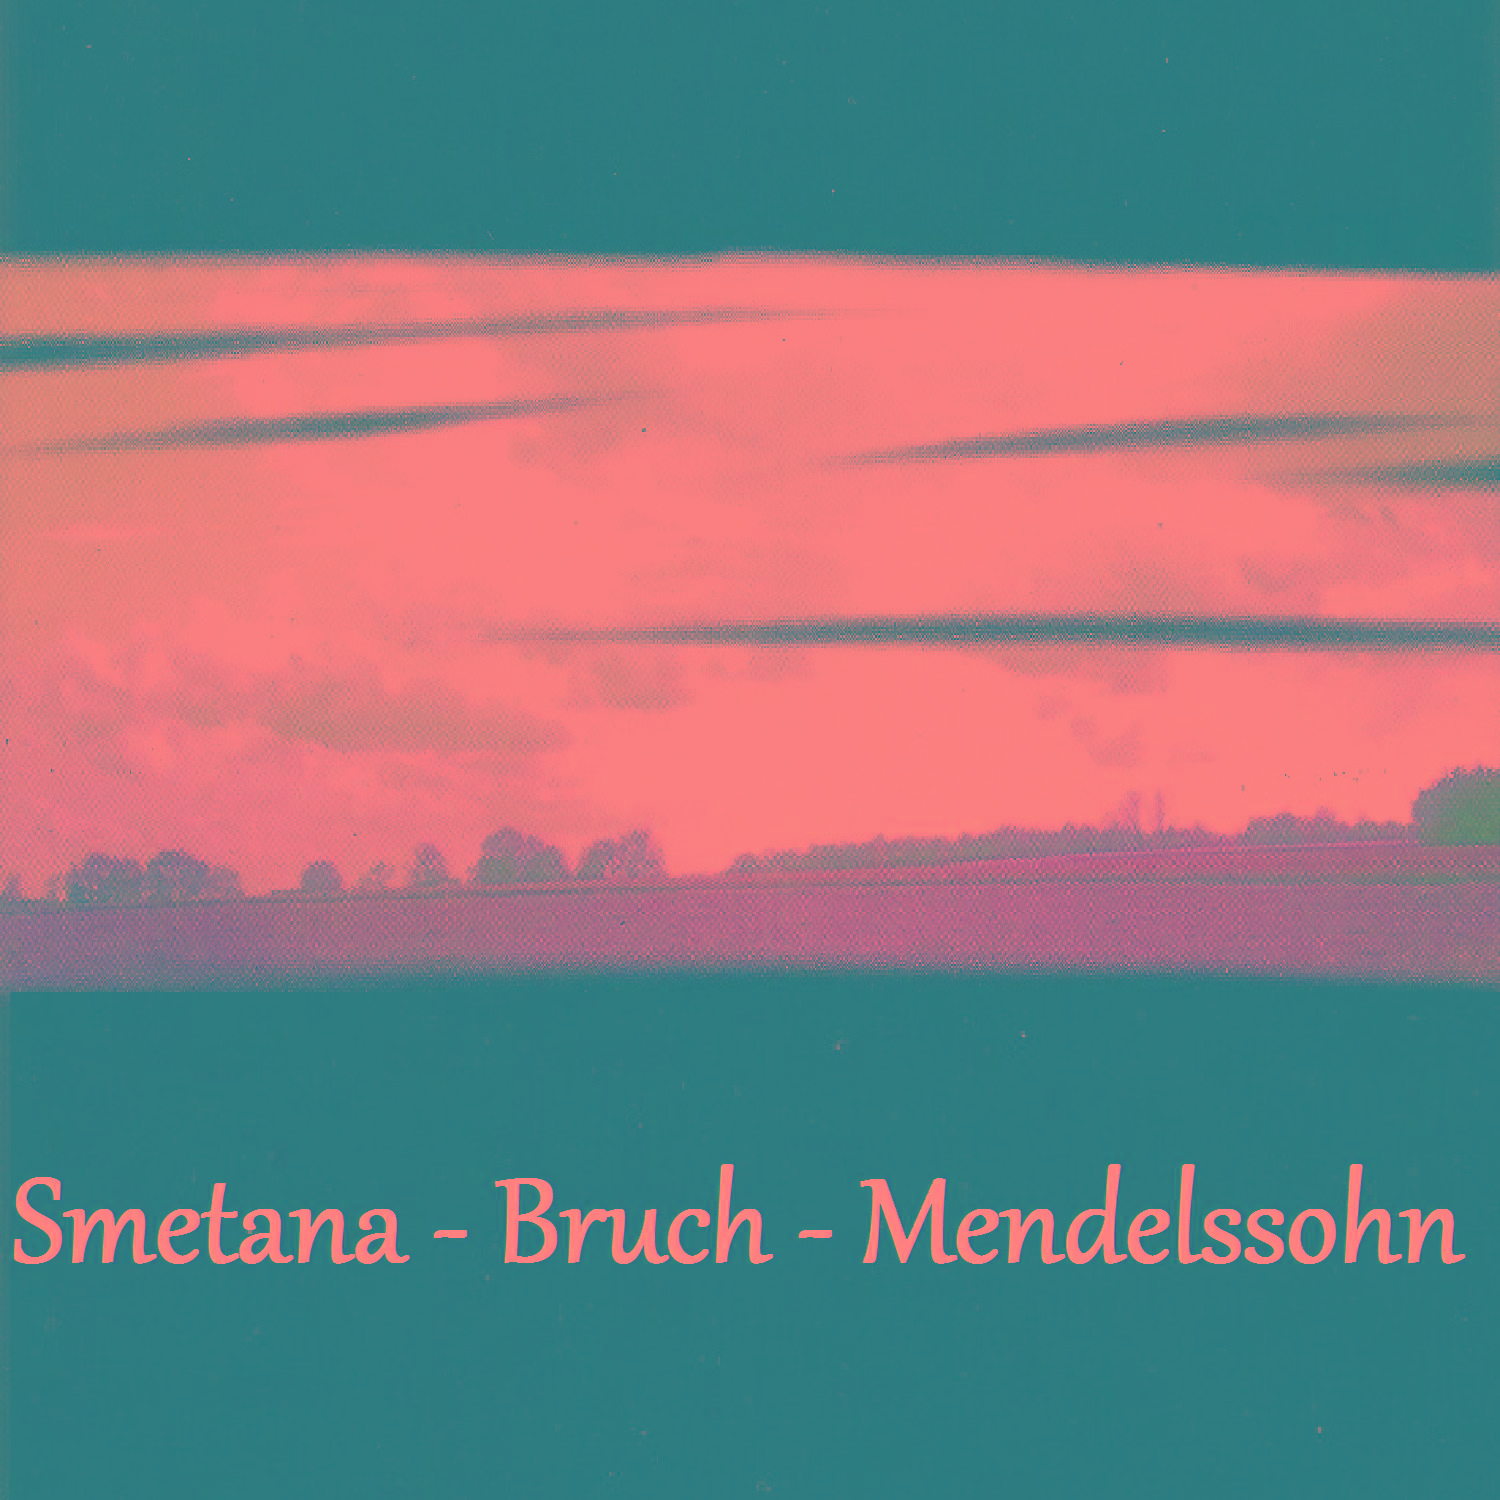 Smetana - Bruch - Mendelssohn